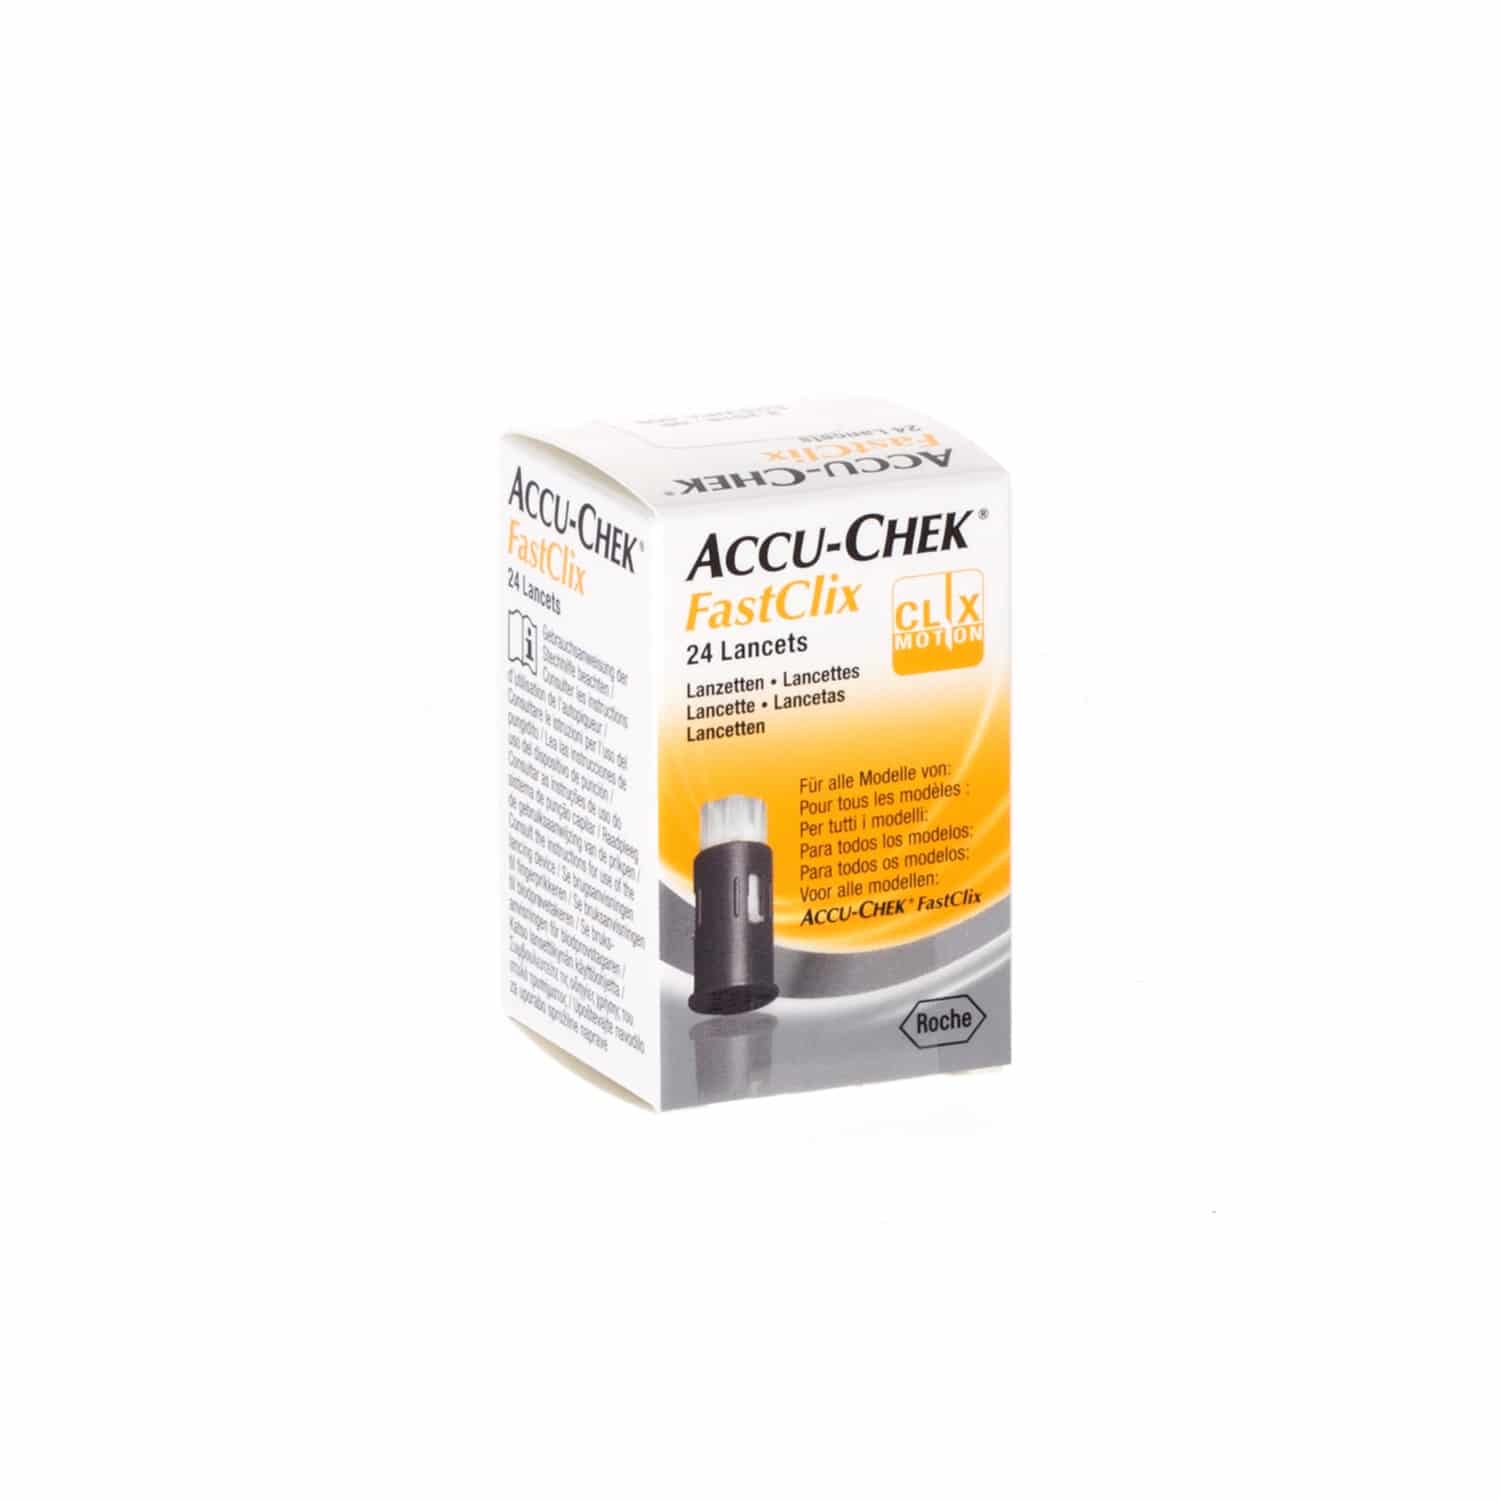 Accu-Chek Mobile Fastclix Lancet